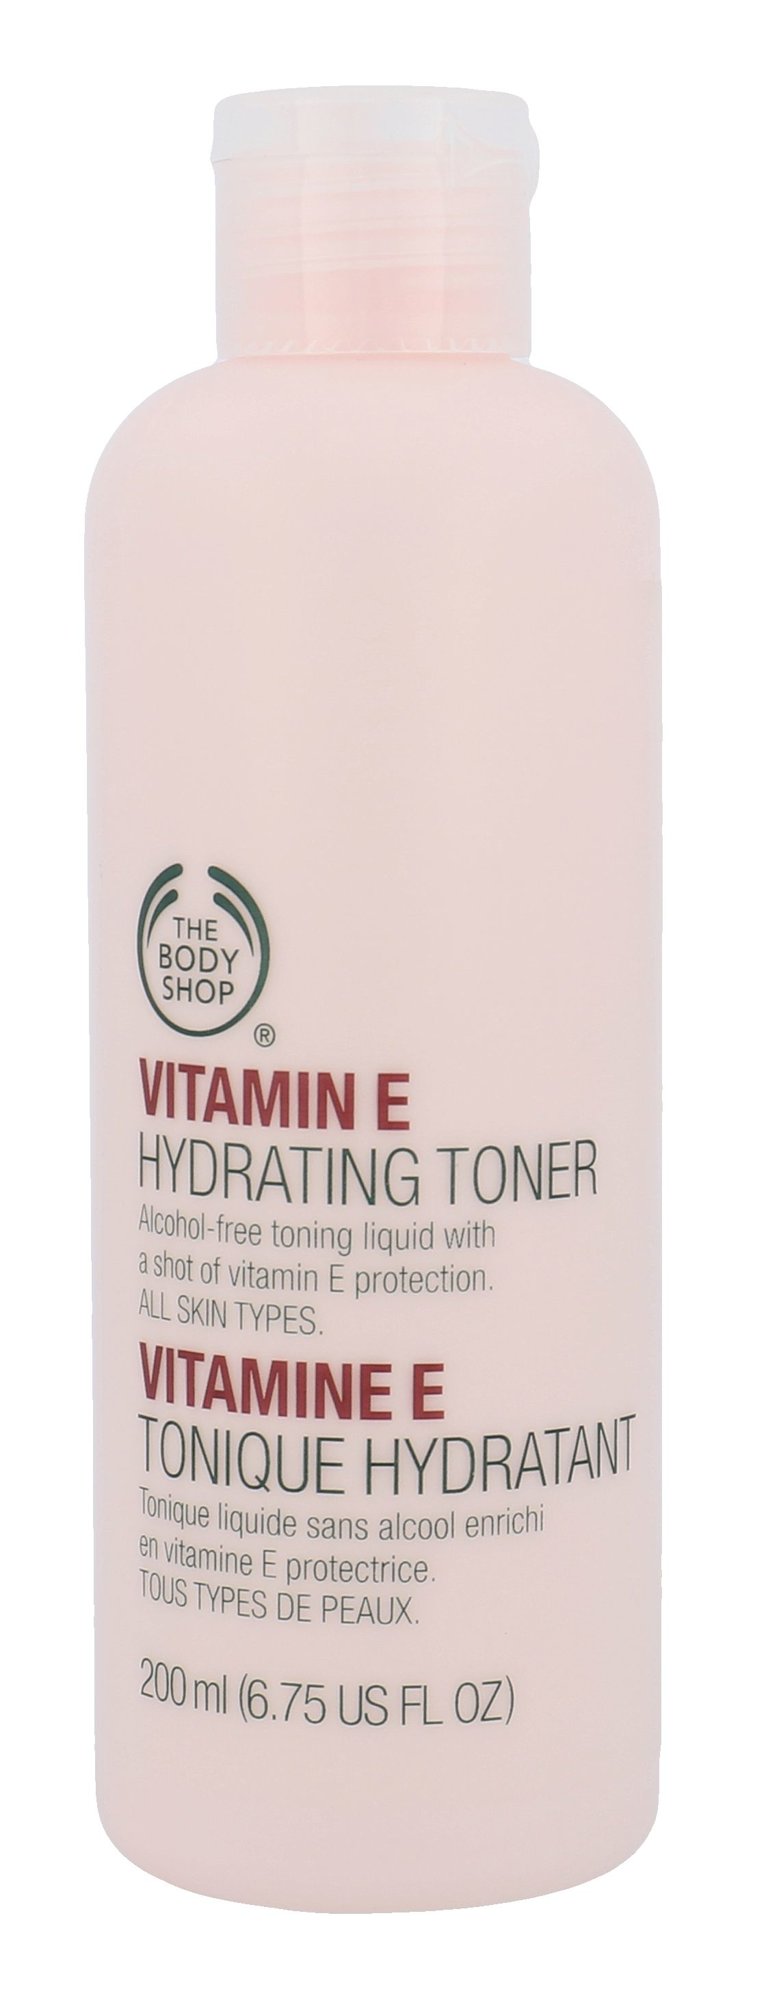 The Body Shop  Vitamin E 200ml valomasis vanduo veidui